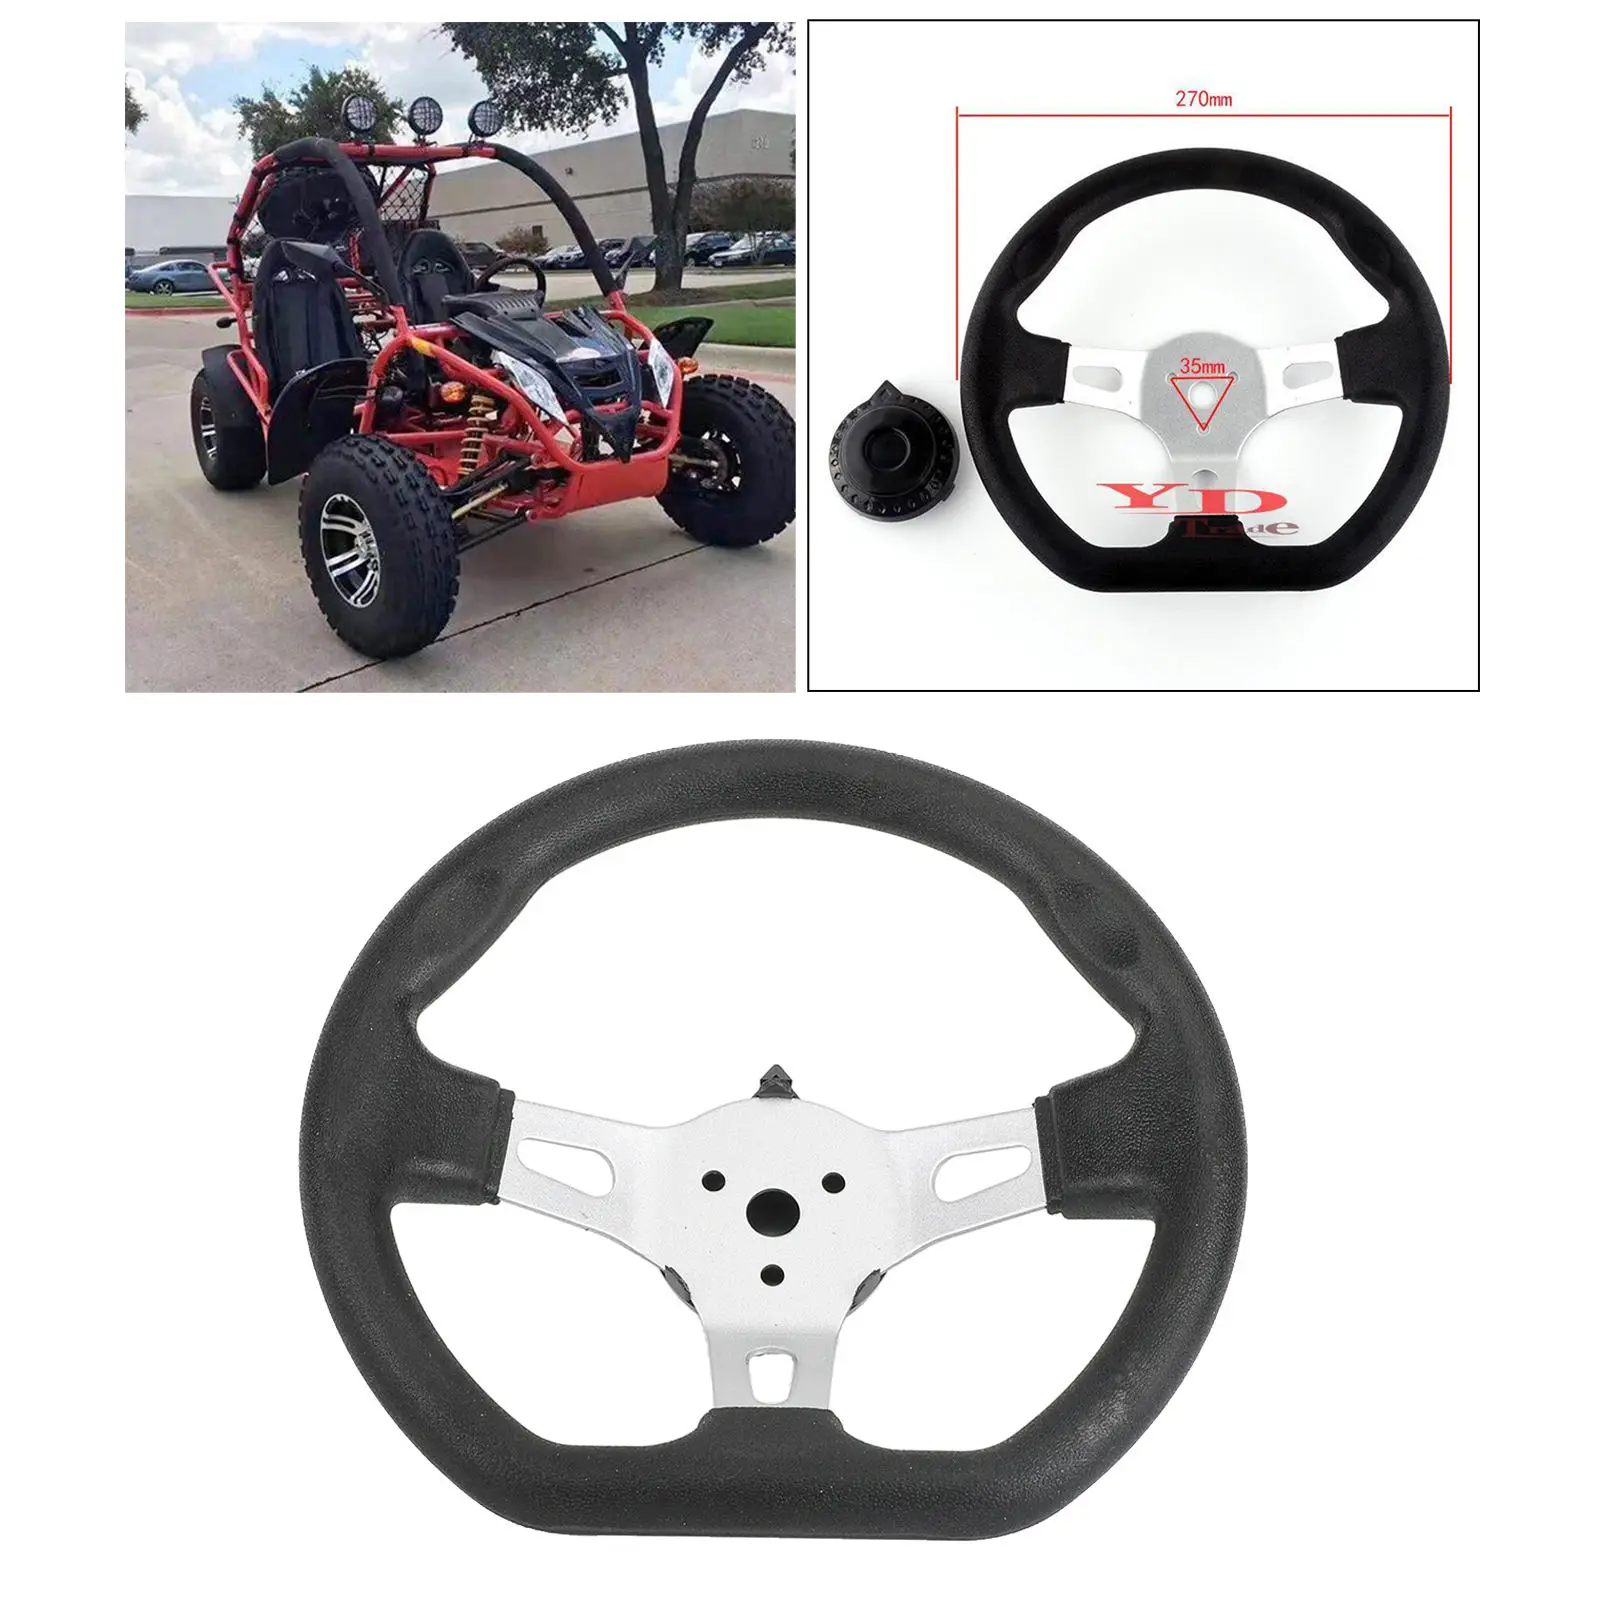 270MM Classic Steering Wheel for Beach Kart Go Kart Buggy Part Accessories - Black